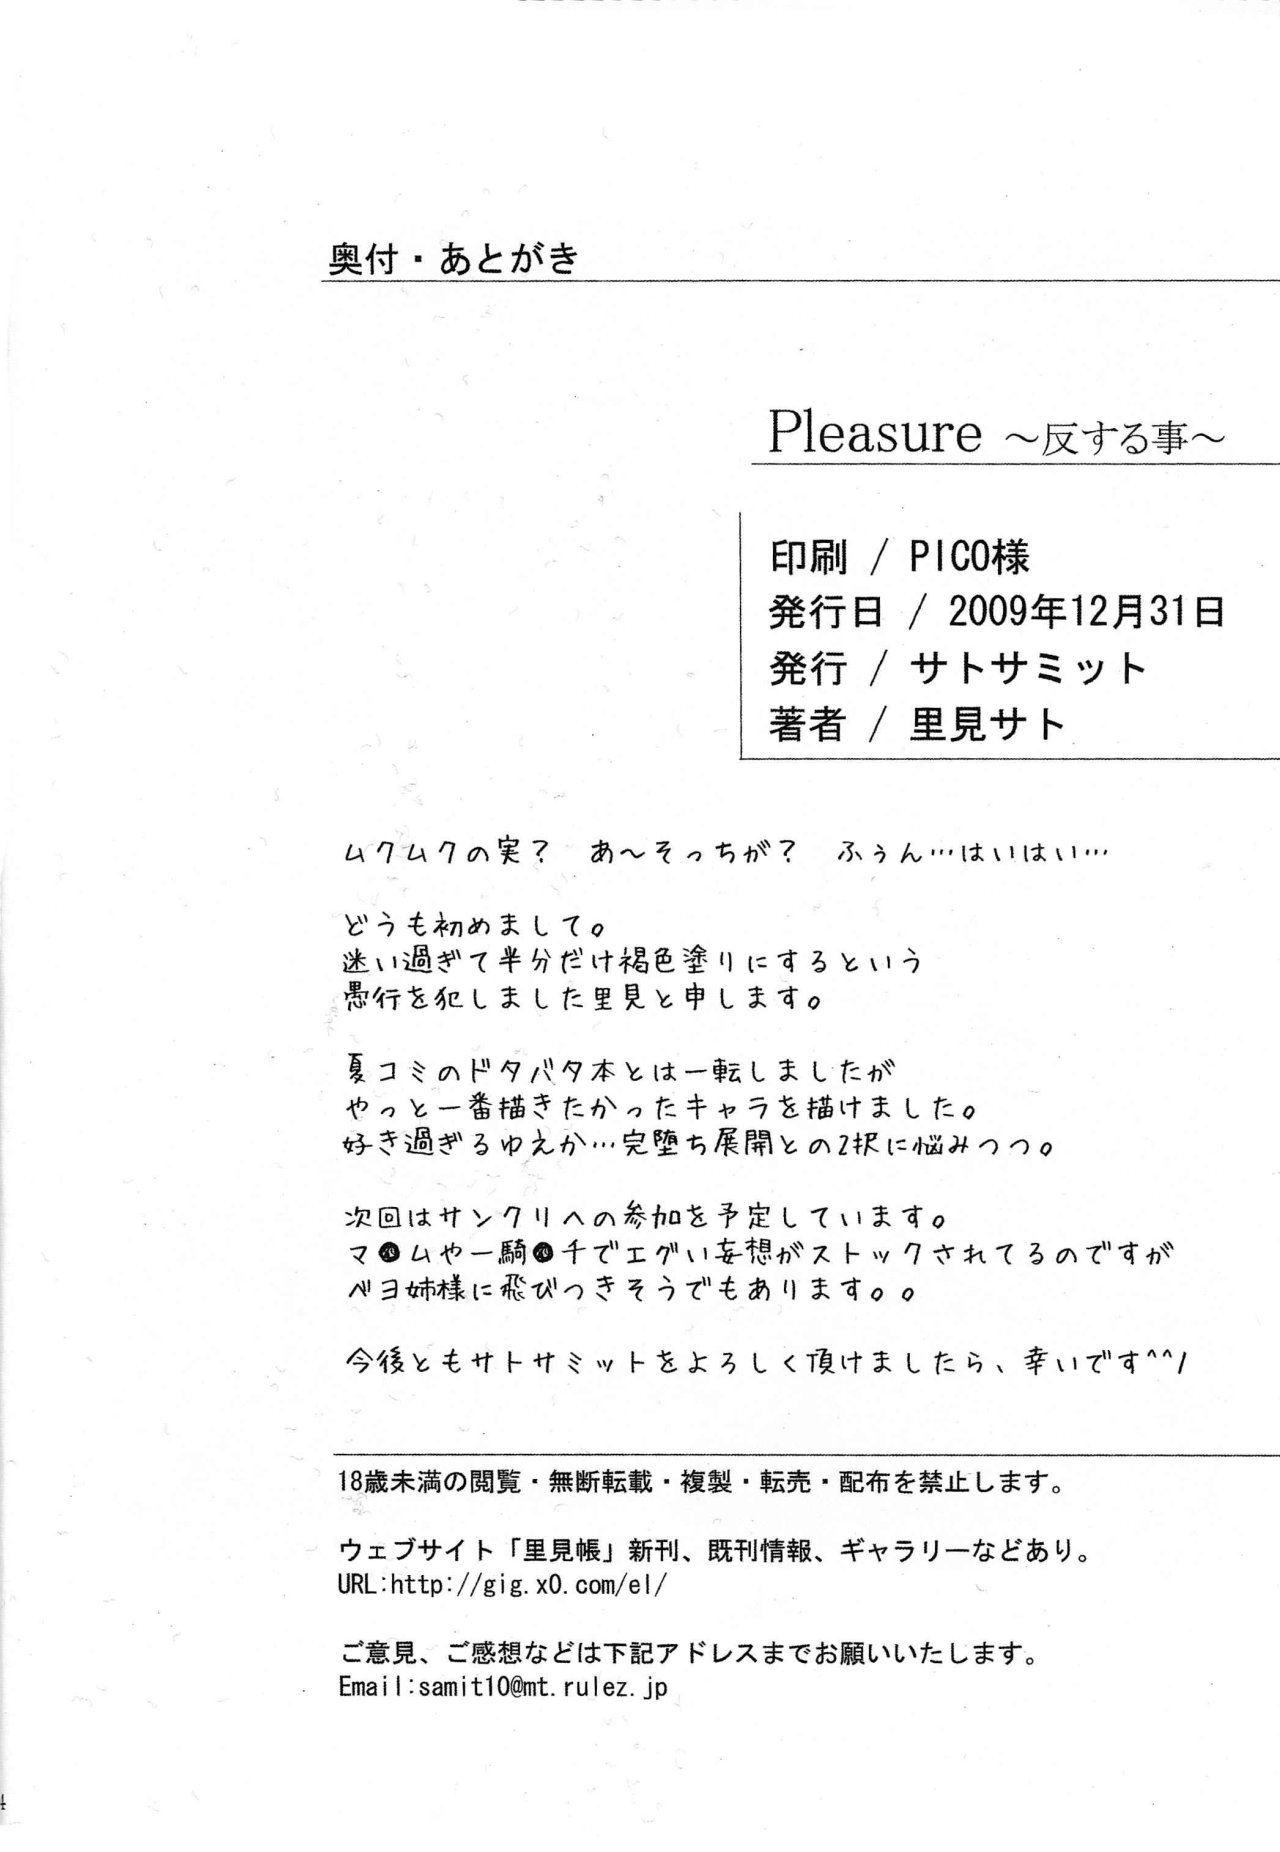 Pleasure (One Piece) - Satomi Sato - 32